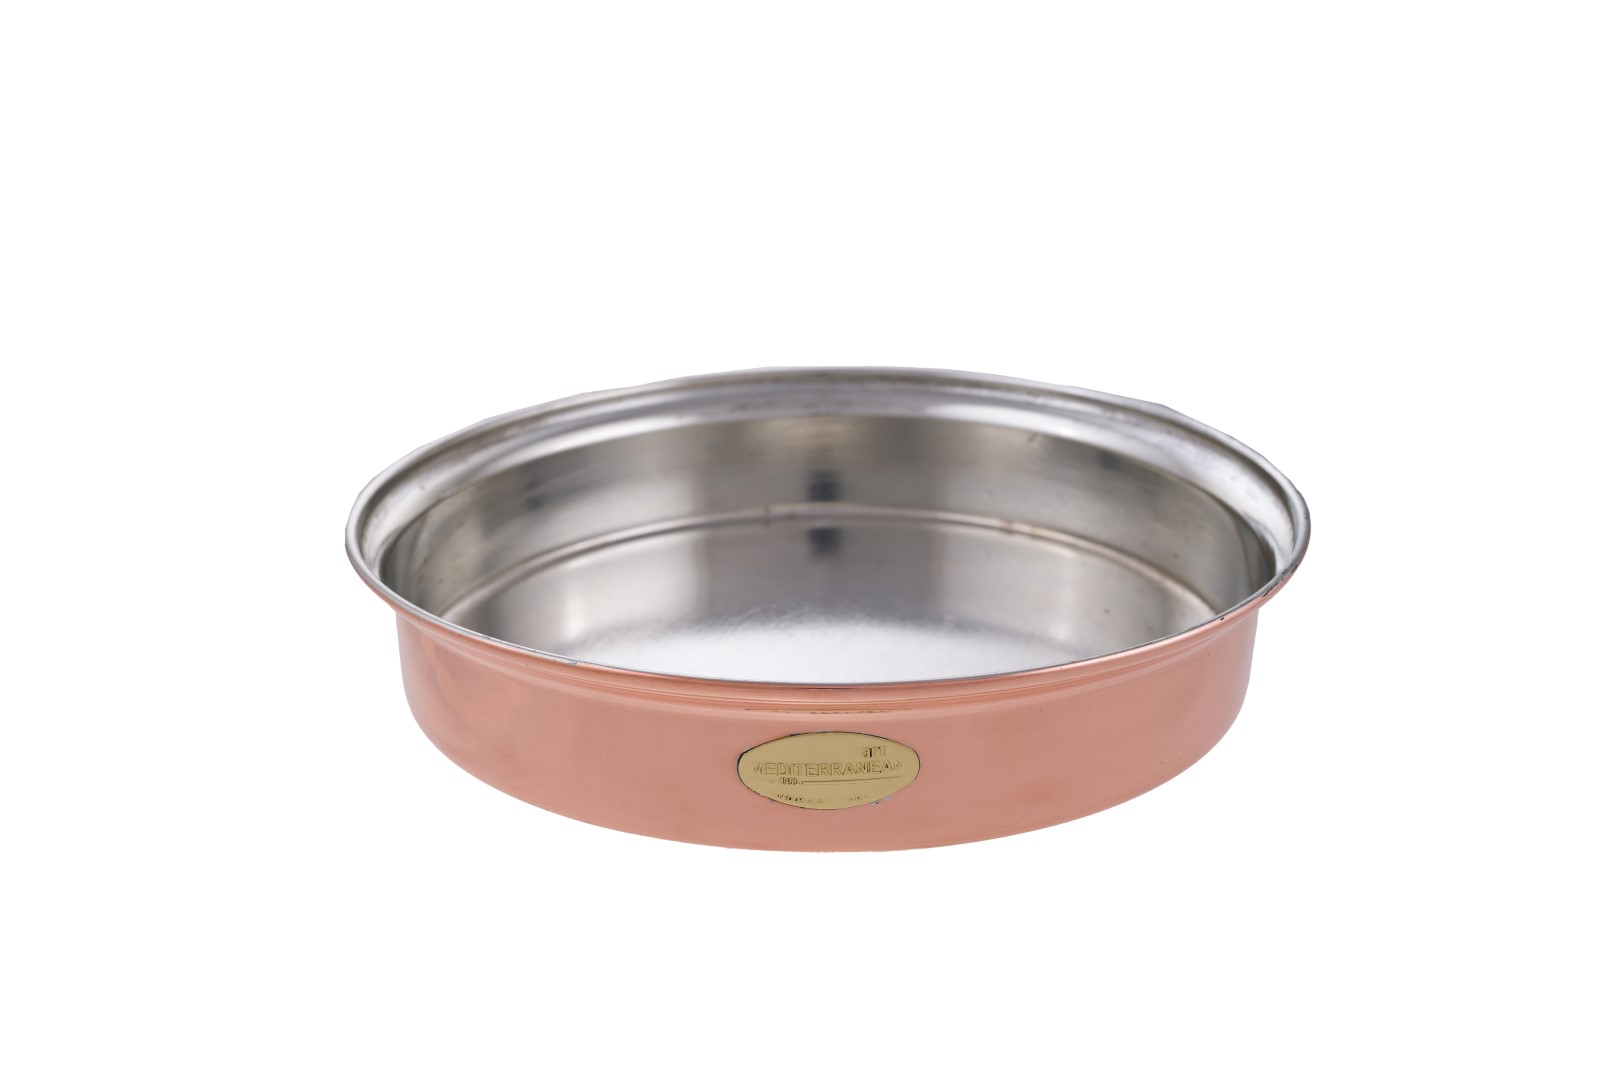 Copper Items - Copper Cooking Pans